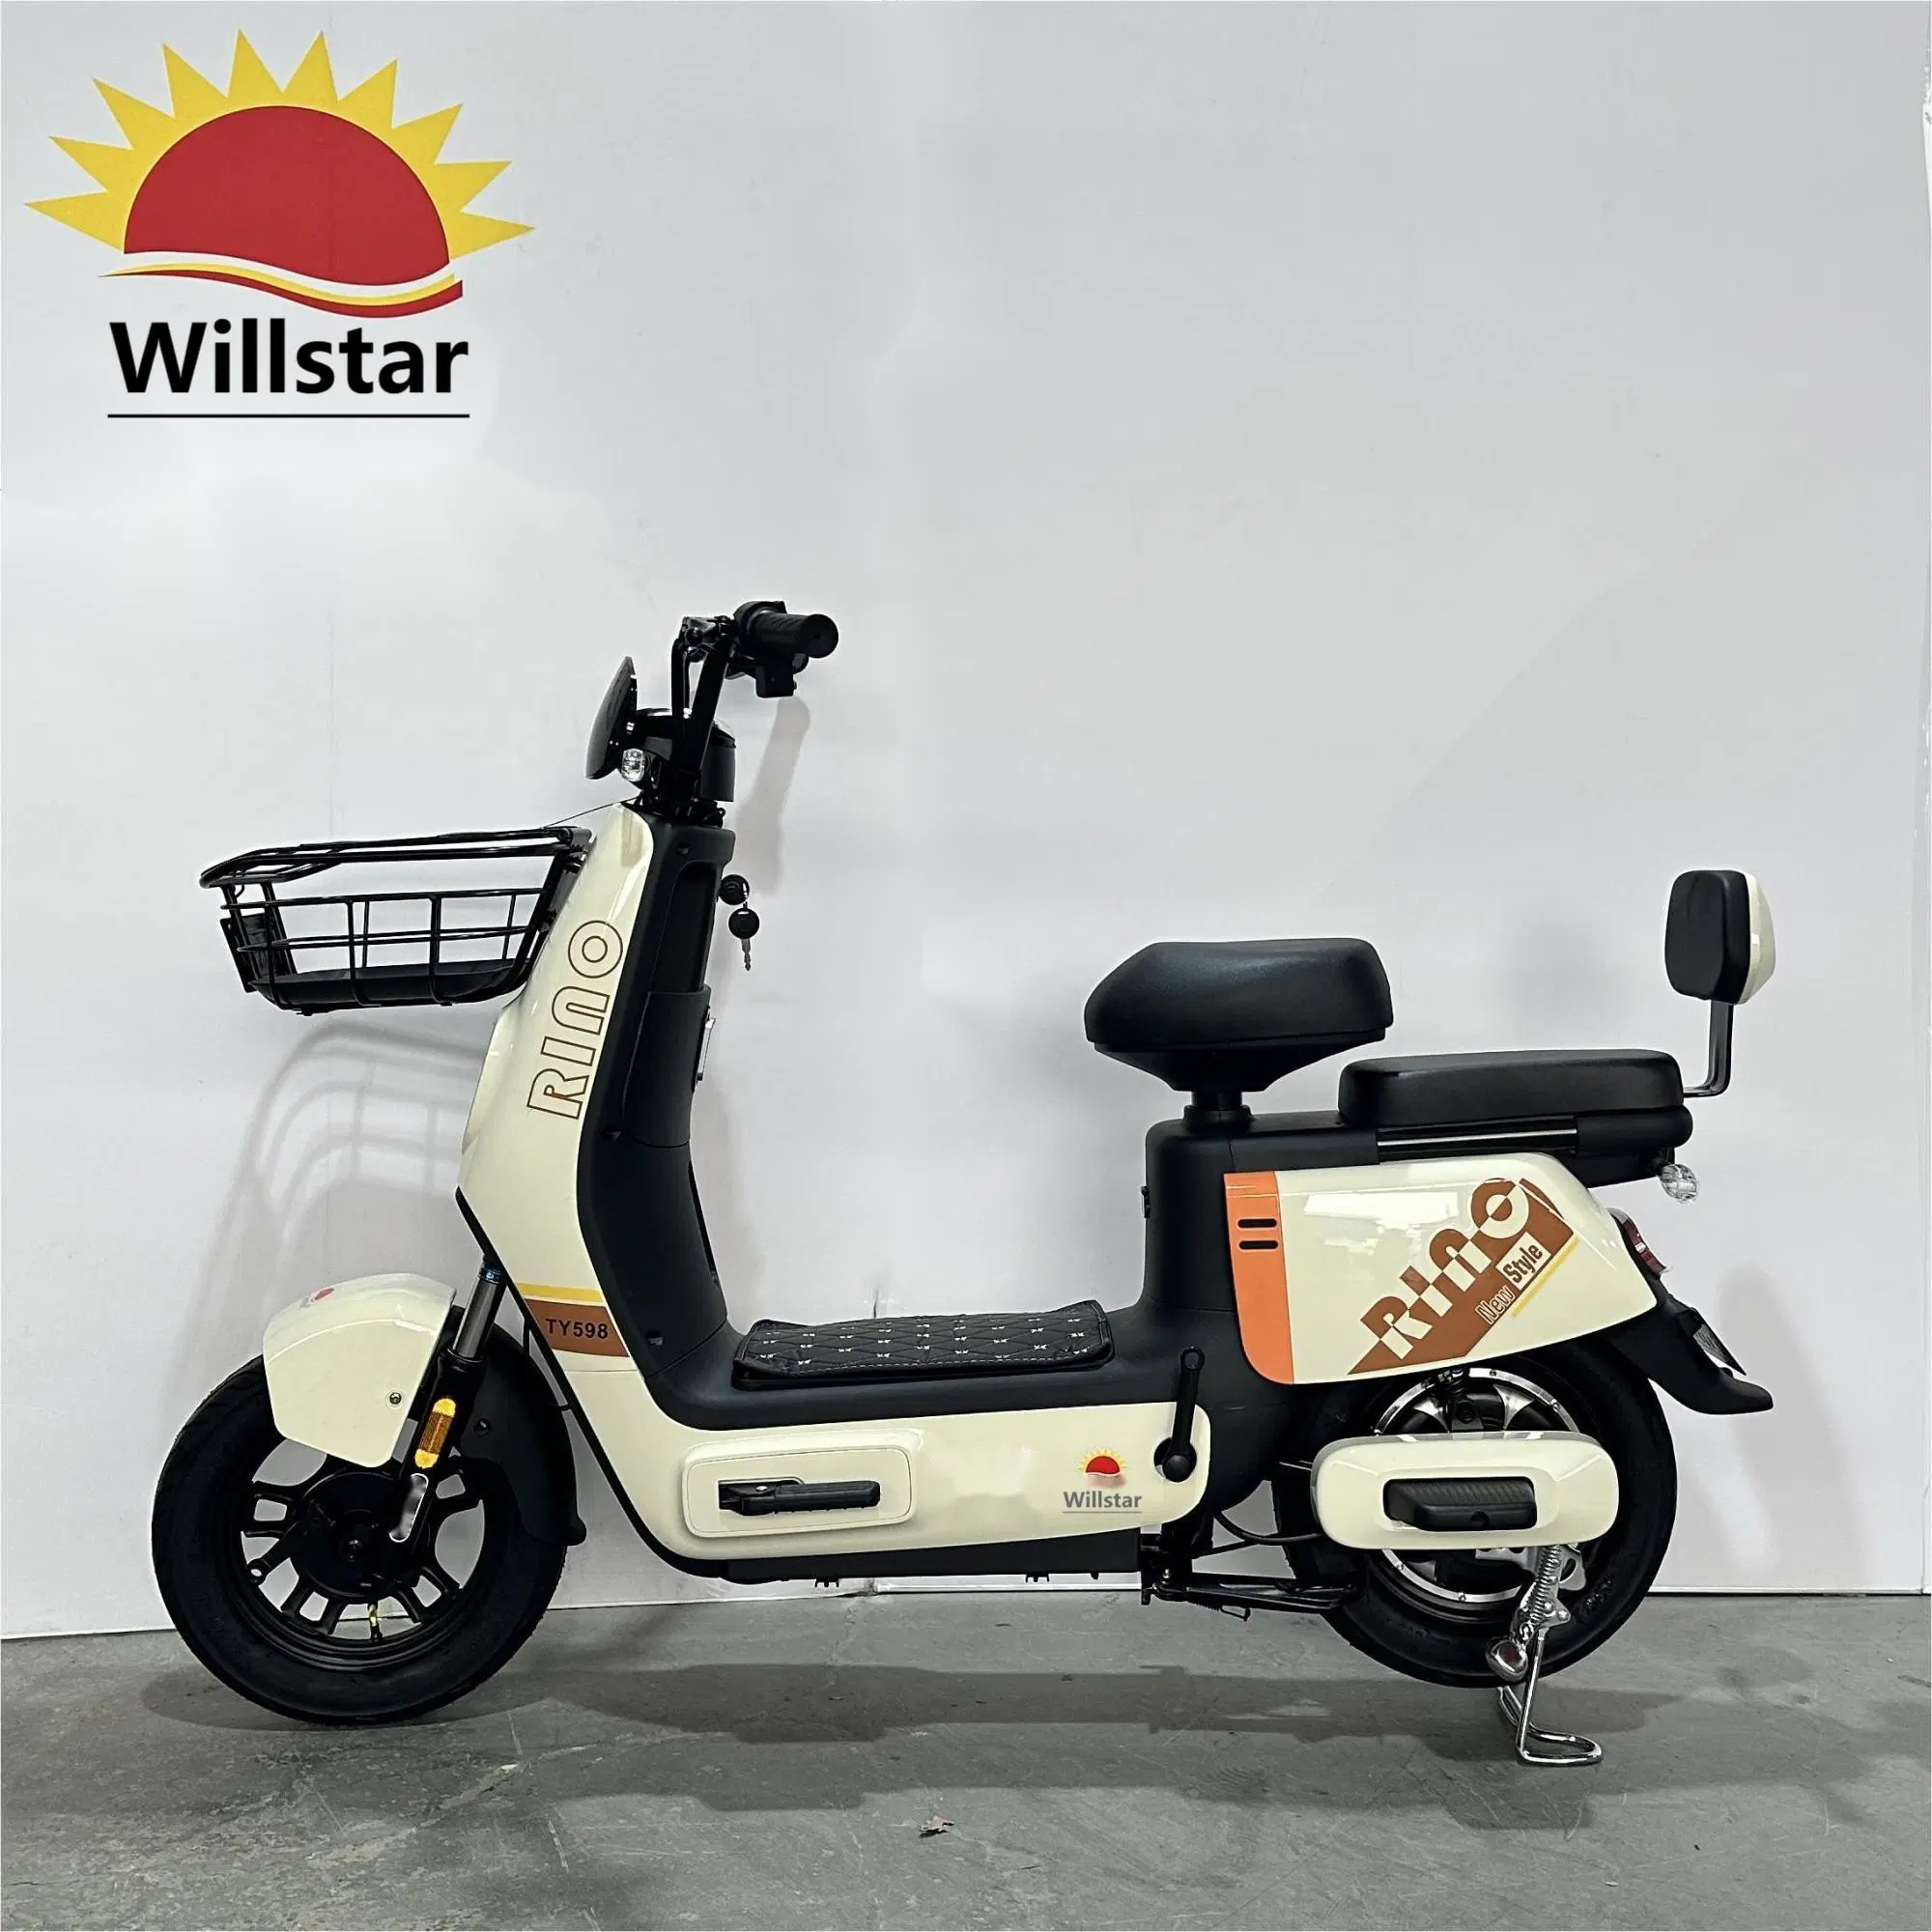 Willstar Electric Bike T598 مع Chilwee أو Tianneng رصاص حمض البطارية الطراز 48V12ah الأخير